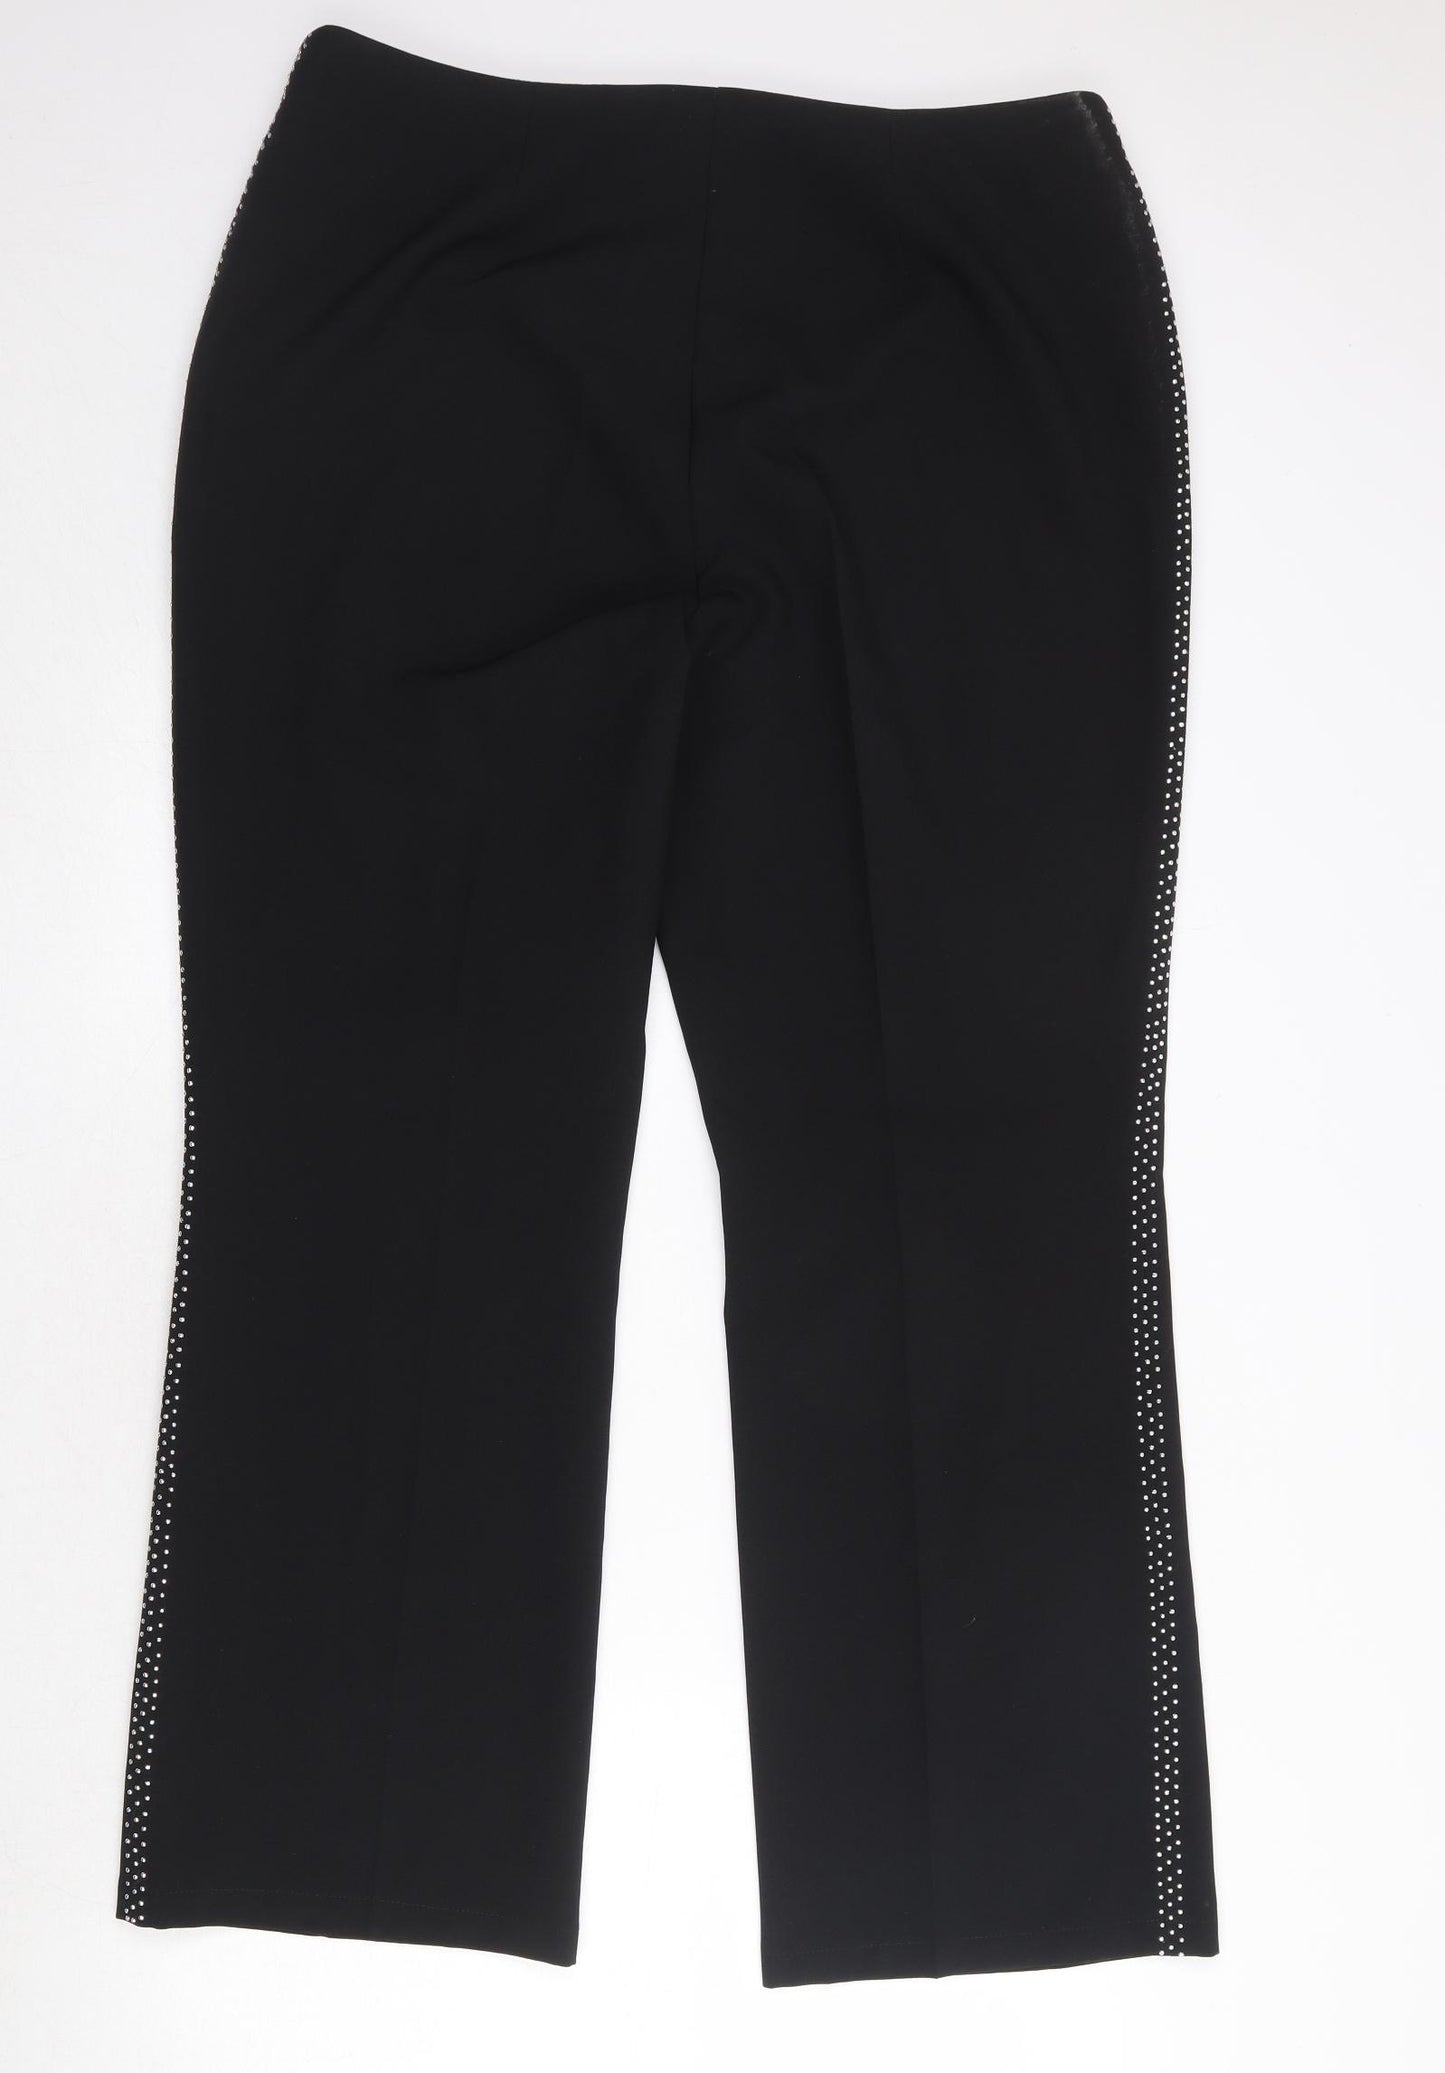 Etam Womens Black Polyester Chino Trousers Size 20 Regular Zip